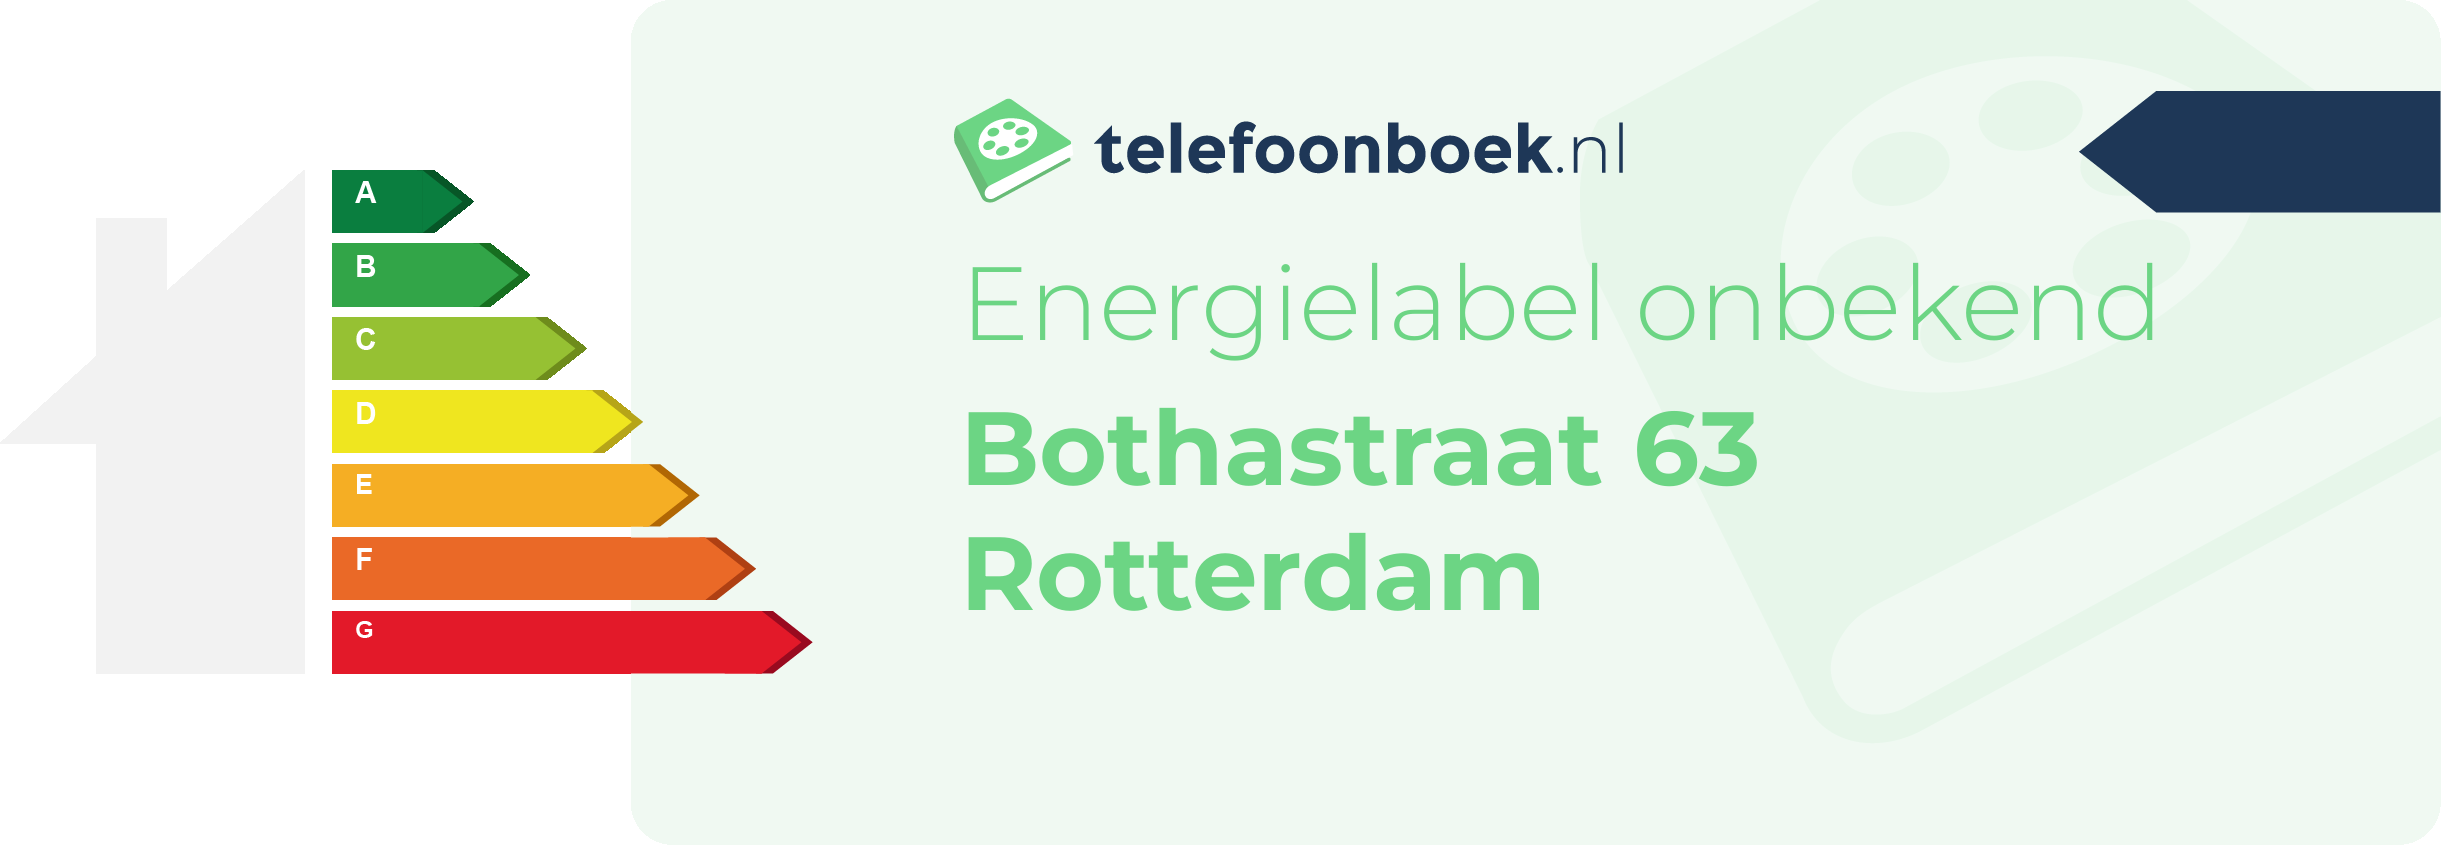 Energielabel Bothastraat 63 Rotterdam